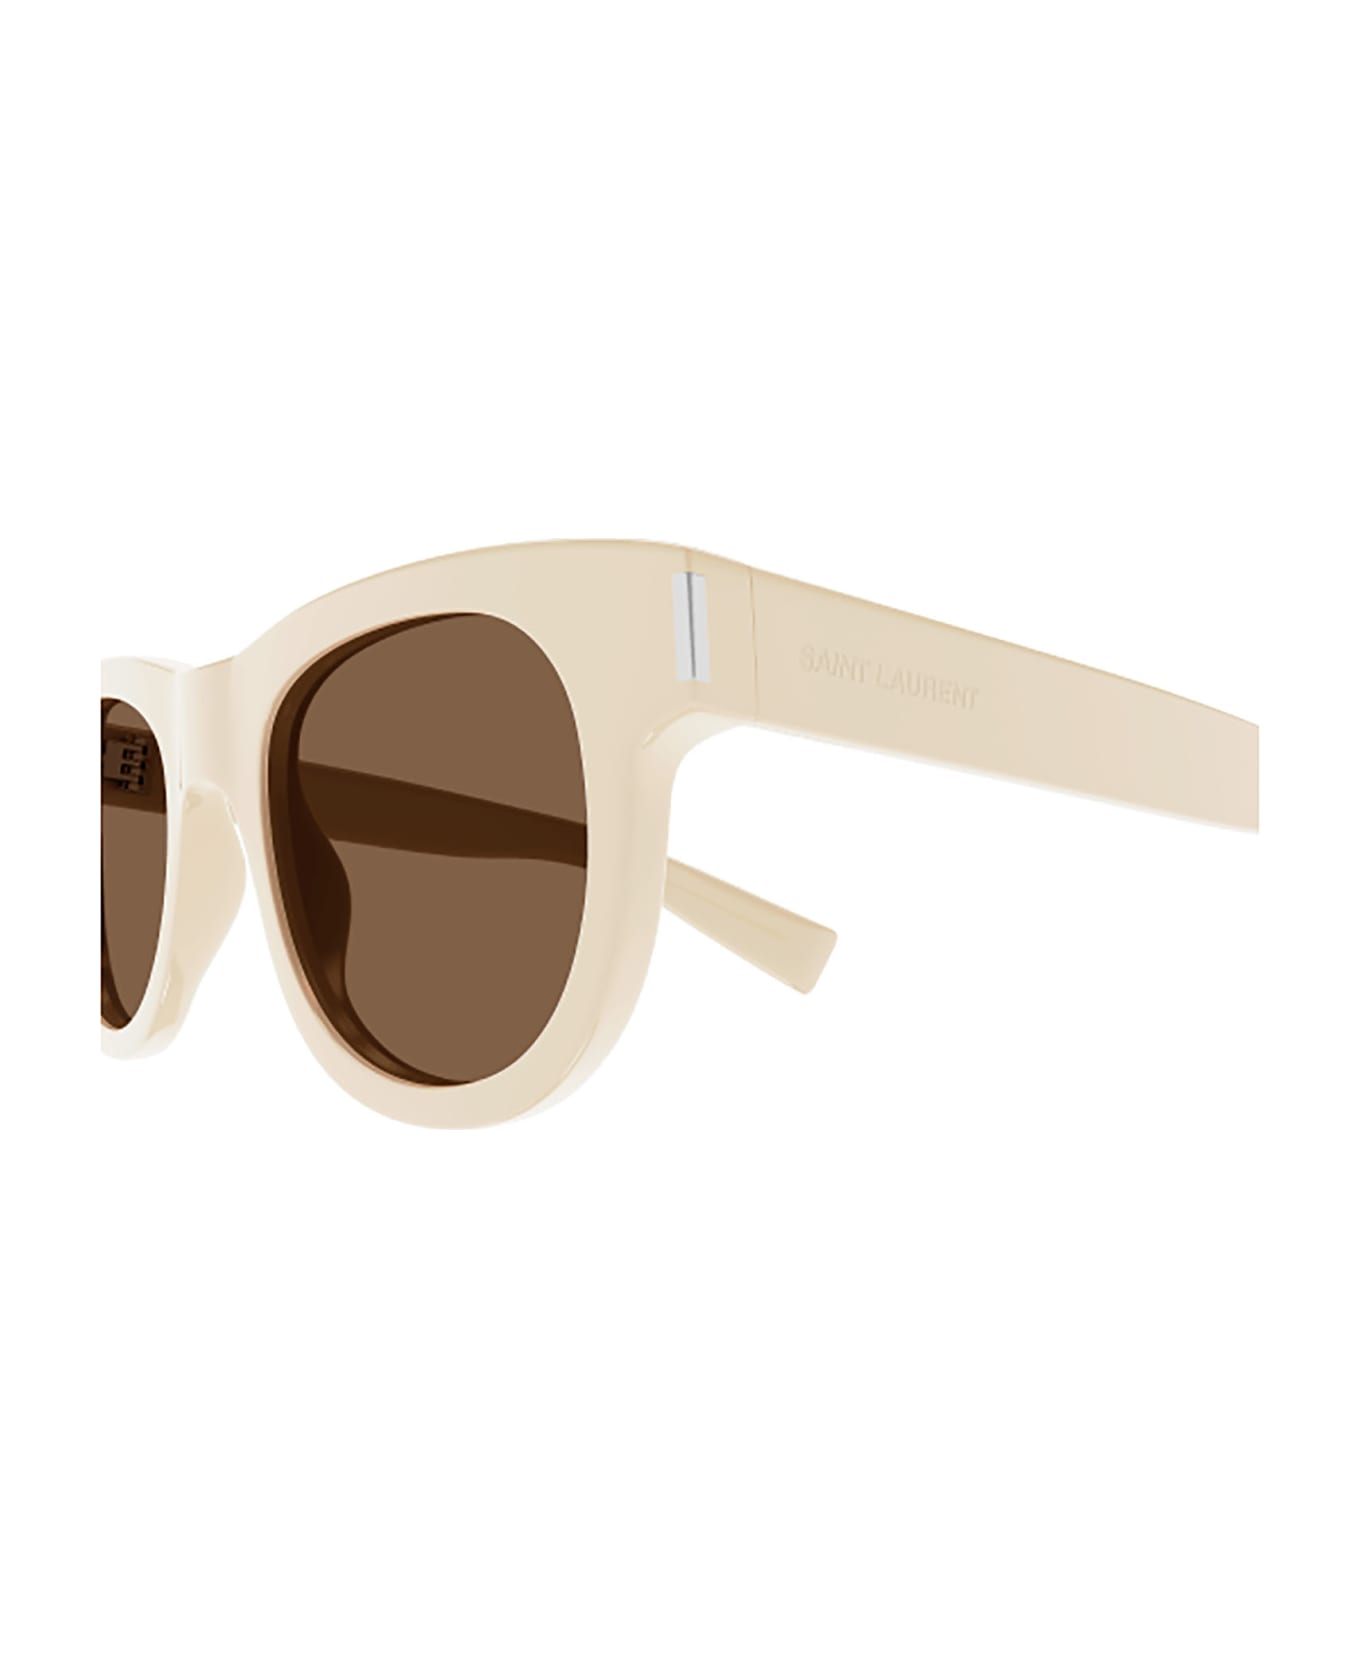 Saint Laurent Eyewear SL 571 Sunglasses - Ivory Ivory Brown